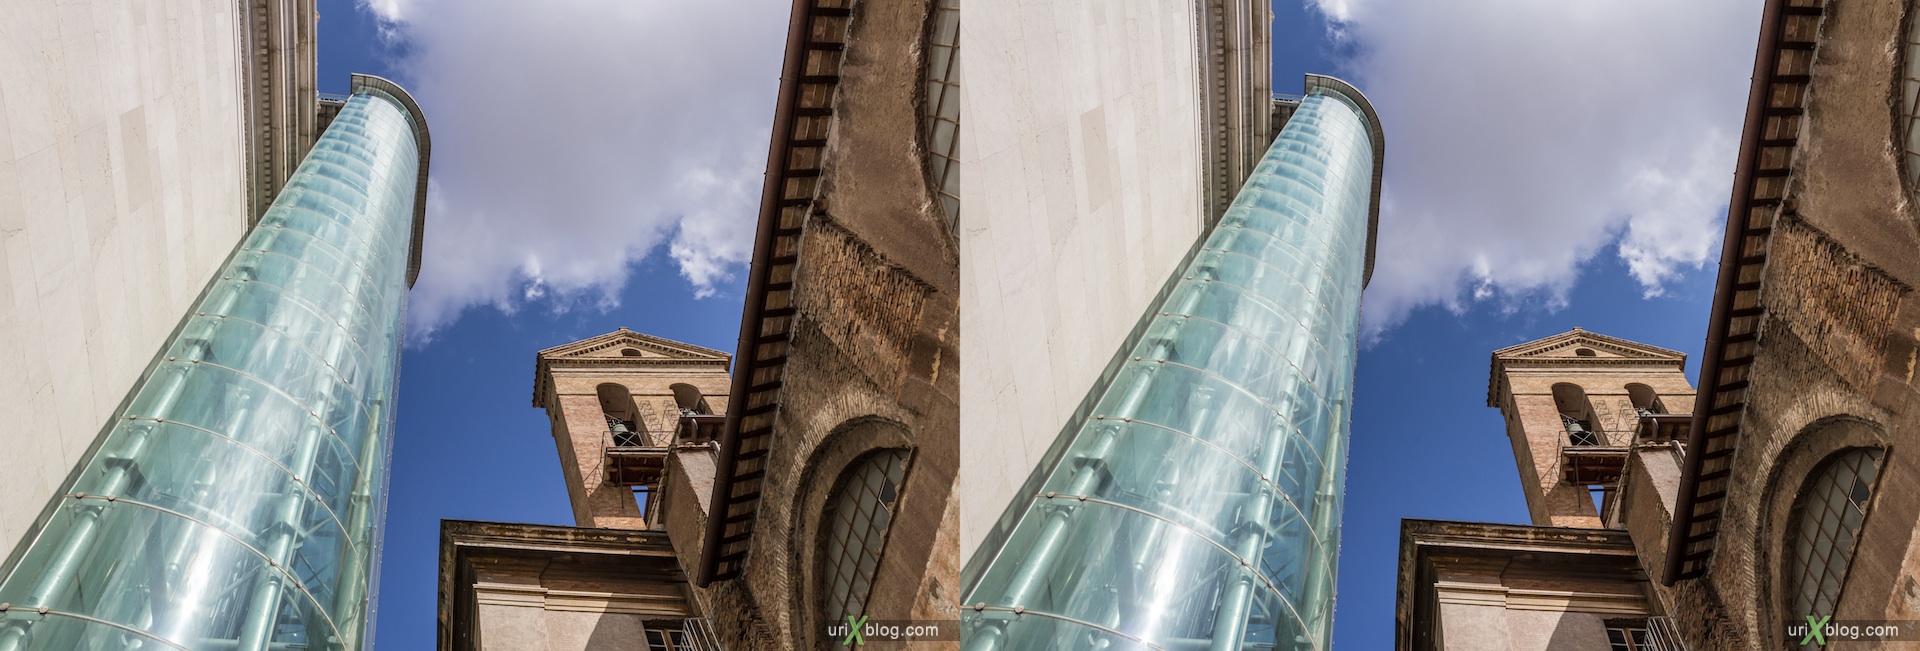 2012, Vittoriano, Monument of Vittorio Emanuele II, Church of Santa Maria in Aracoeli, lift, viewpoint, roof, Rome, Italy, Europe, 3D, stereo pair, cross-eyed, crossview, cross view stereo pair